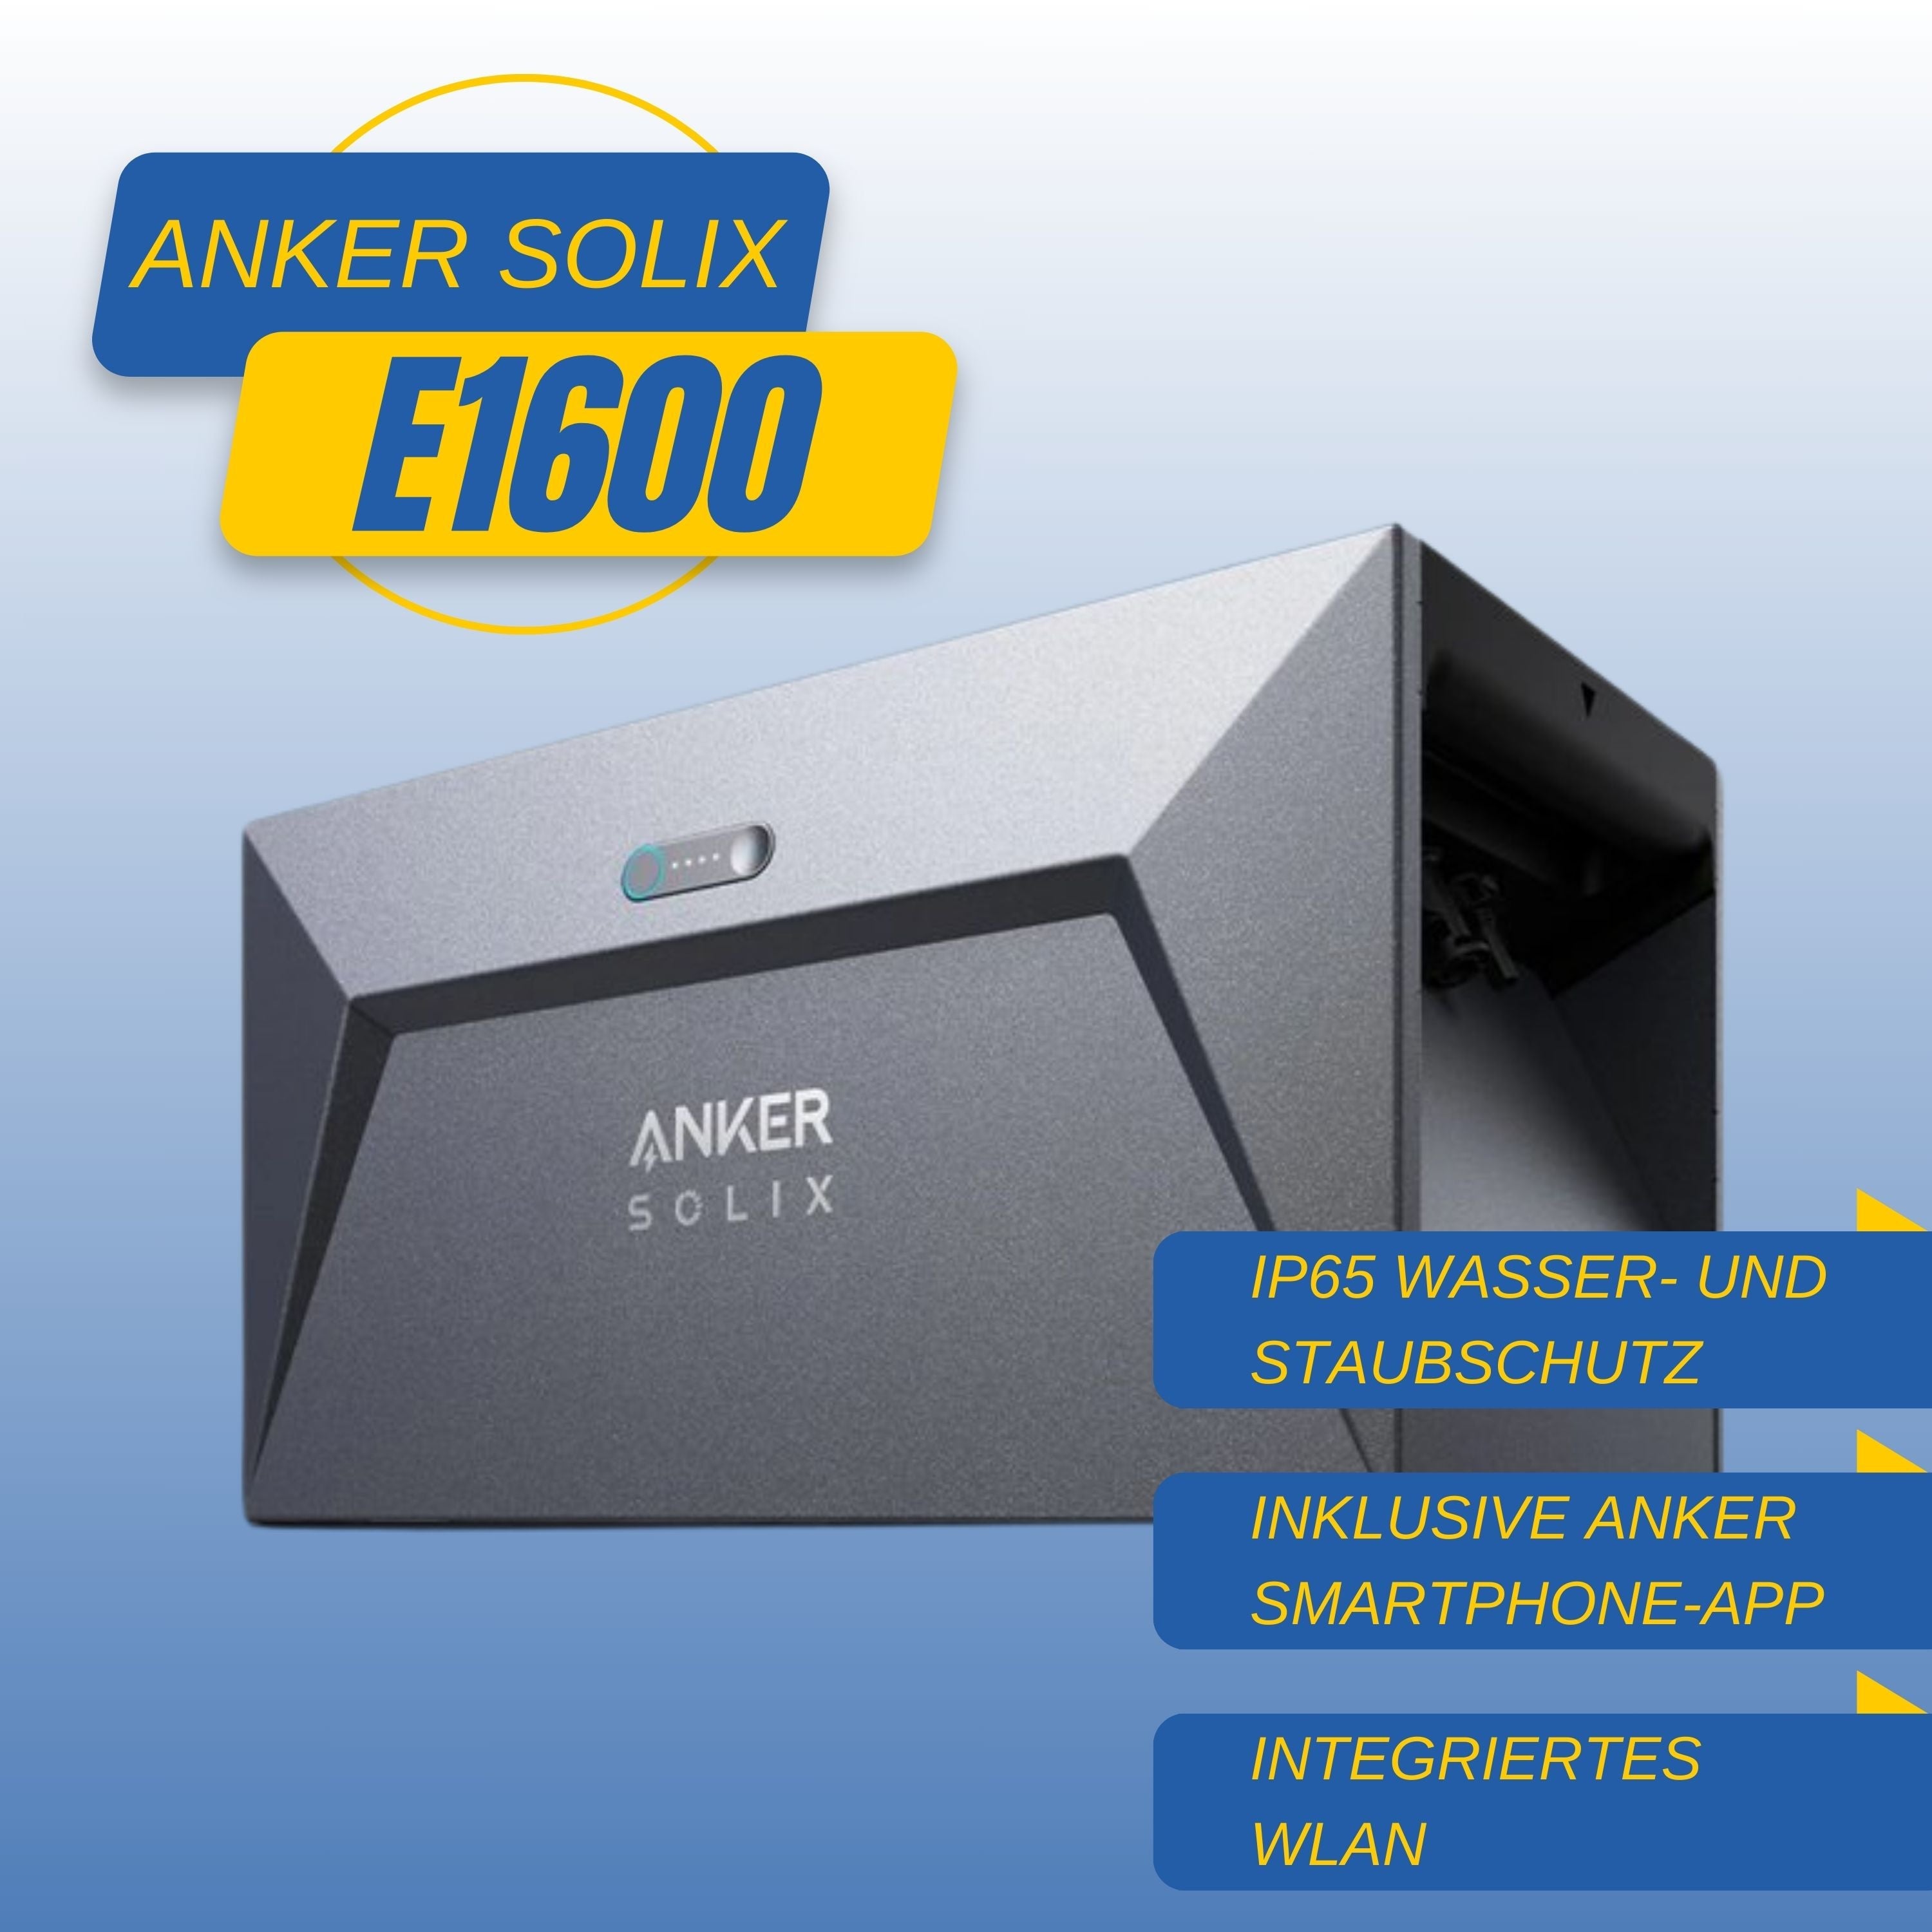 Anker SOLIX Solarbank E1600 1600Wh Solarstromspeicher